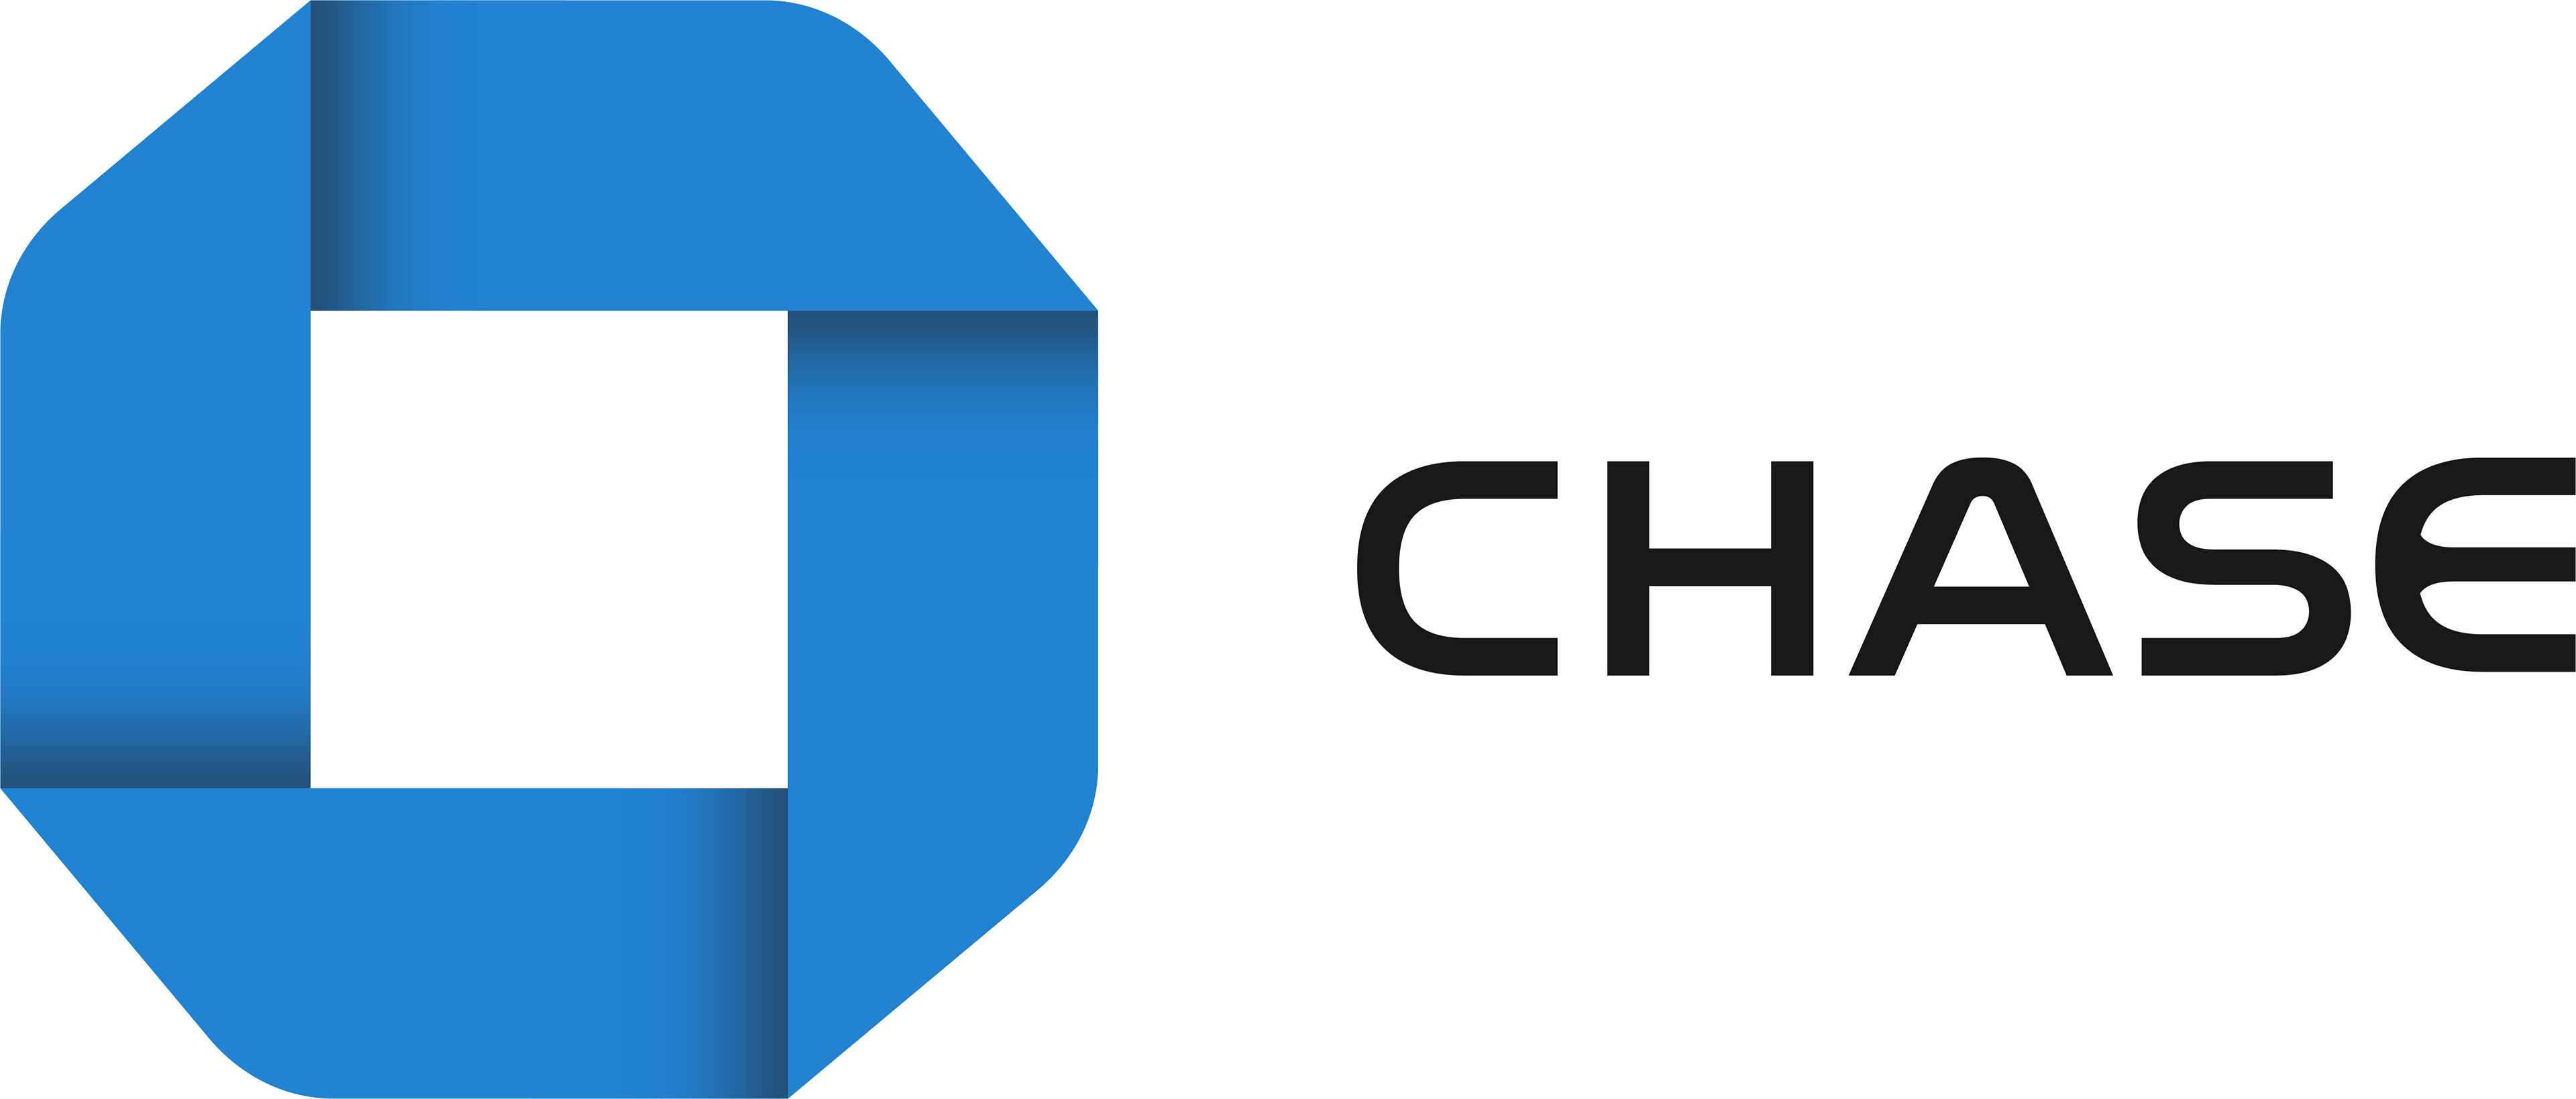 Current Chase Logo - Proenza's Portfolio - Chase Bank Concept Logo